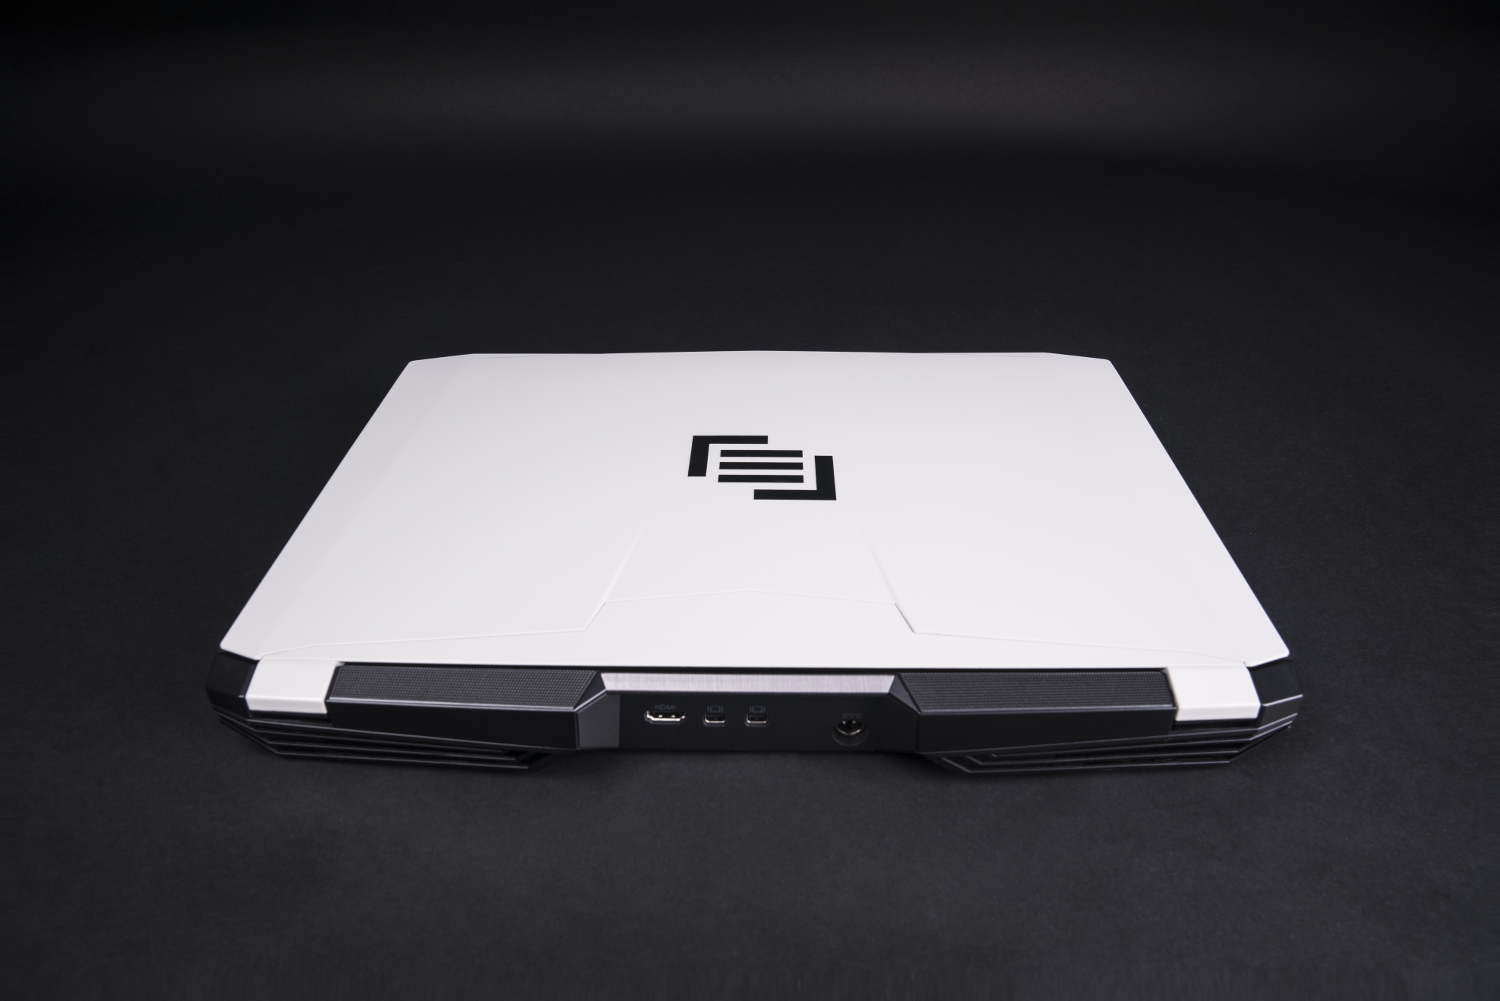 maingear vybe desktop refreshed nomad pulse laptops gtx 10 series